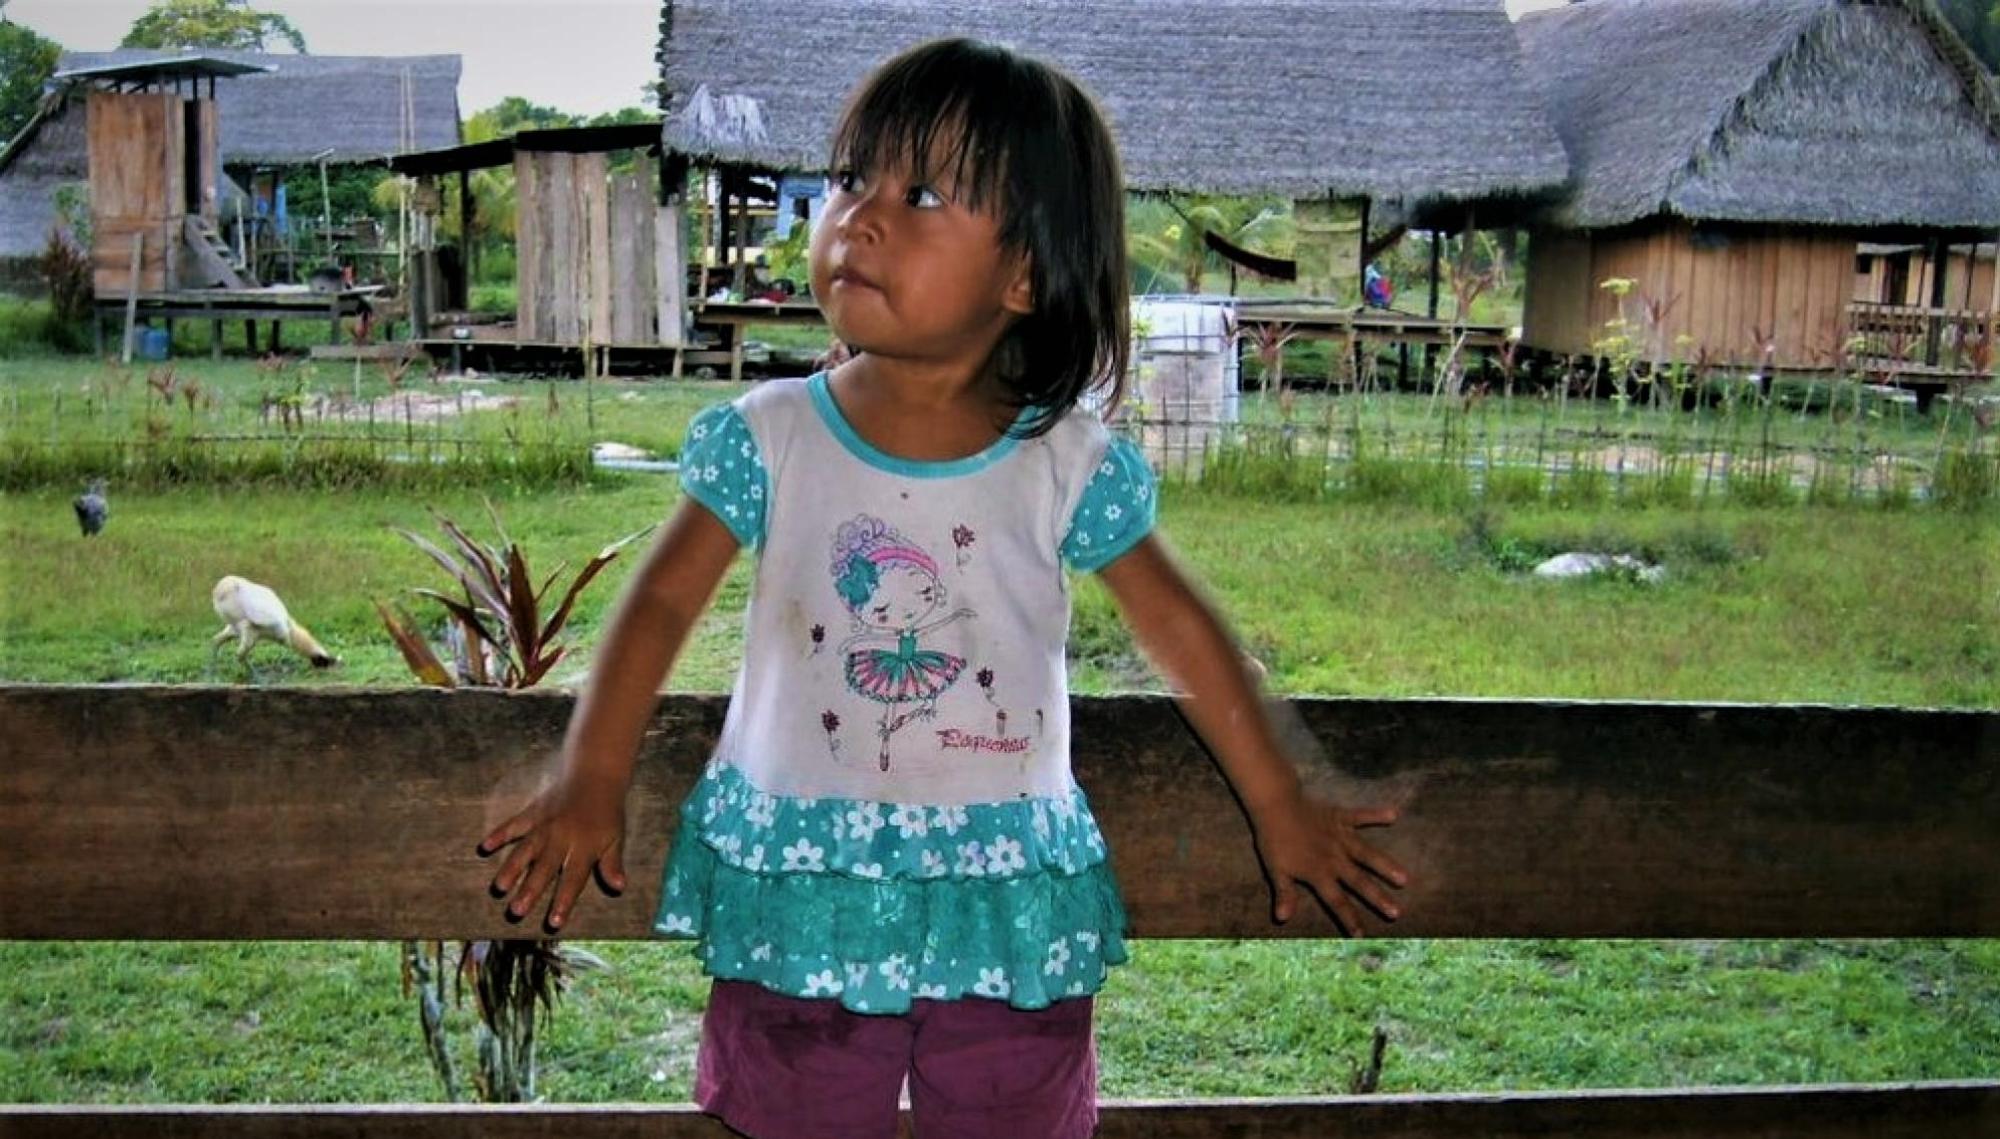 A Peruvian child and country scene 